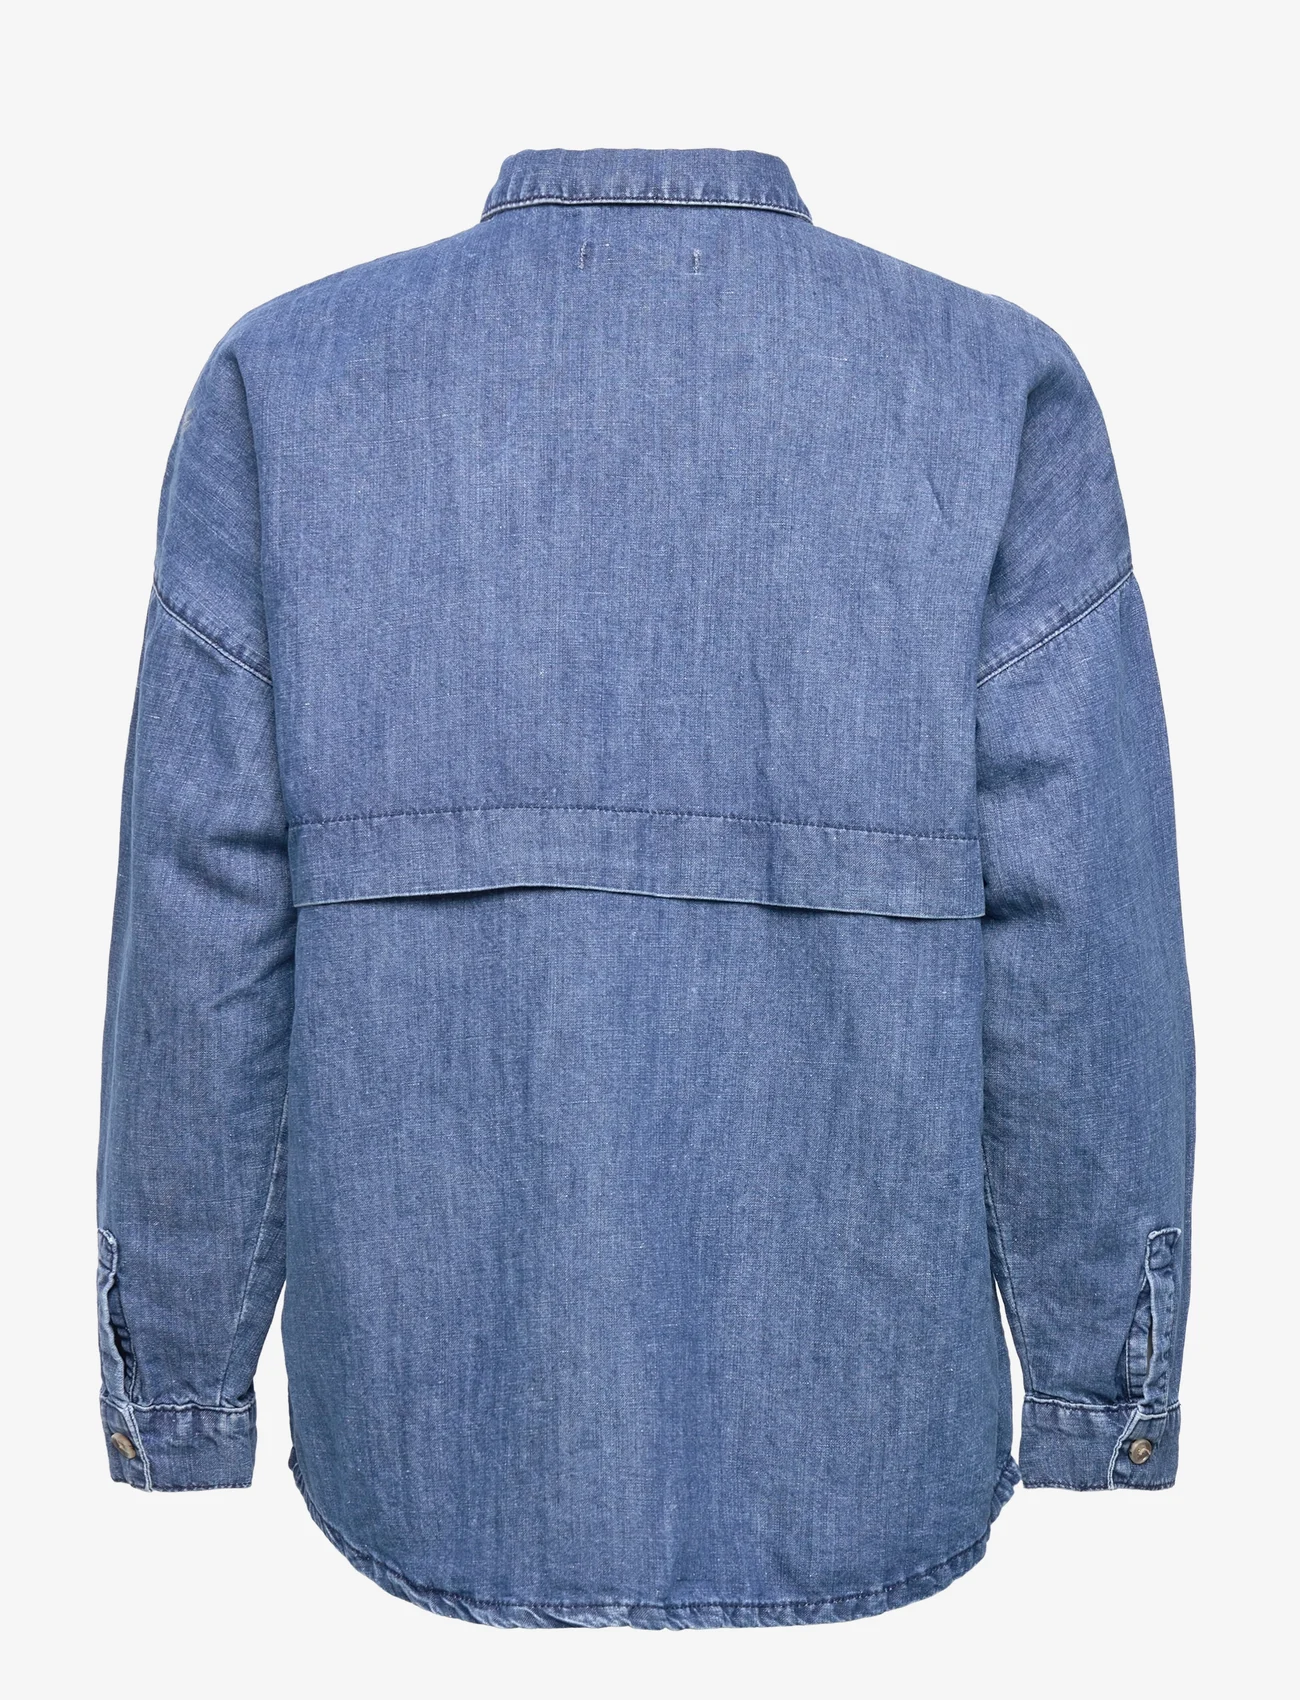 Esprit Collection - With hemp: denim blouse - denim shirts - blue medium wash - 1